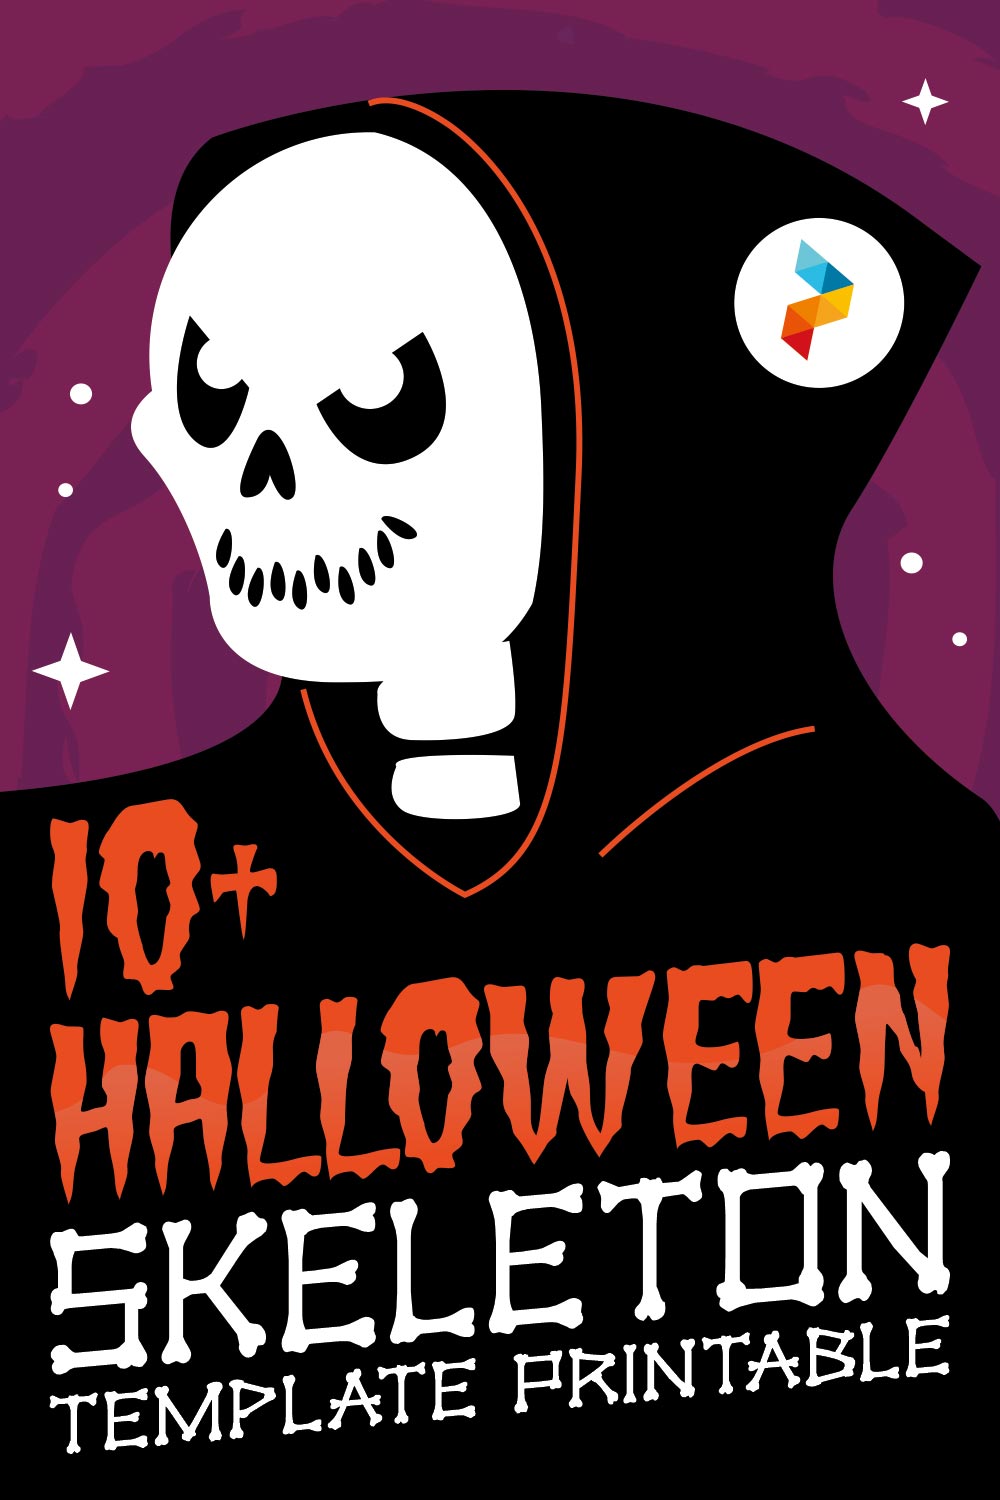 Halloween Skeleton Template Printable